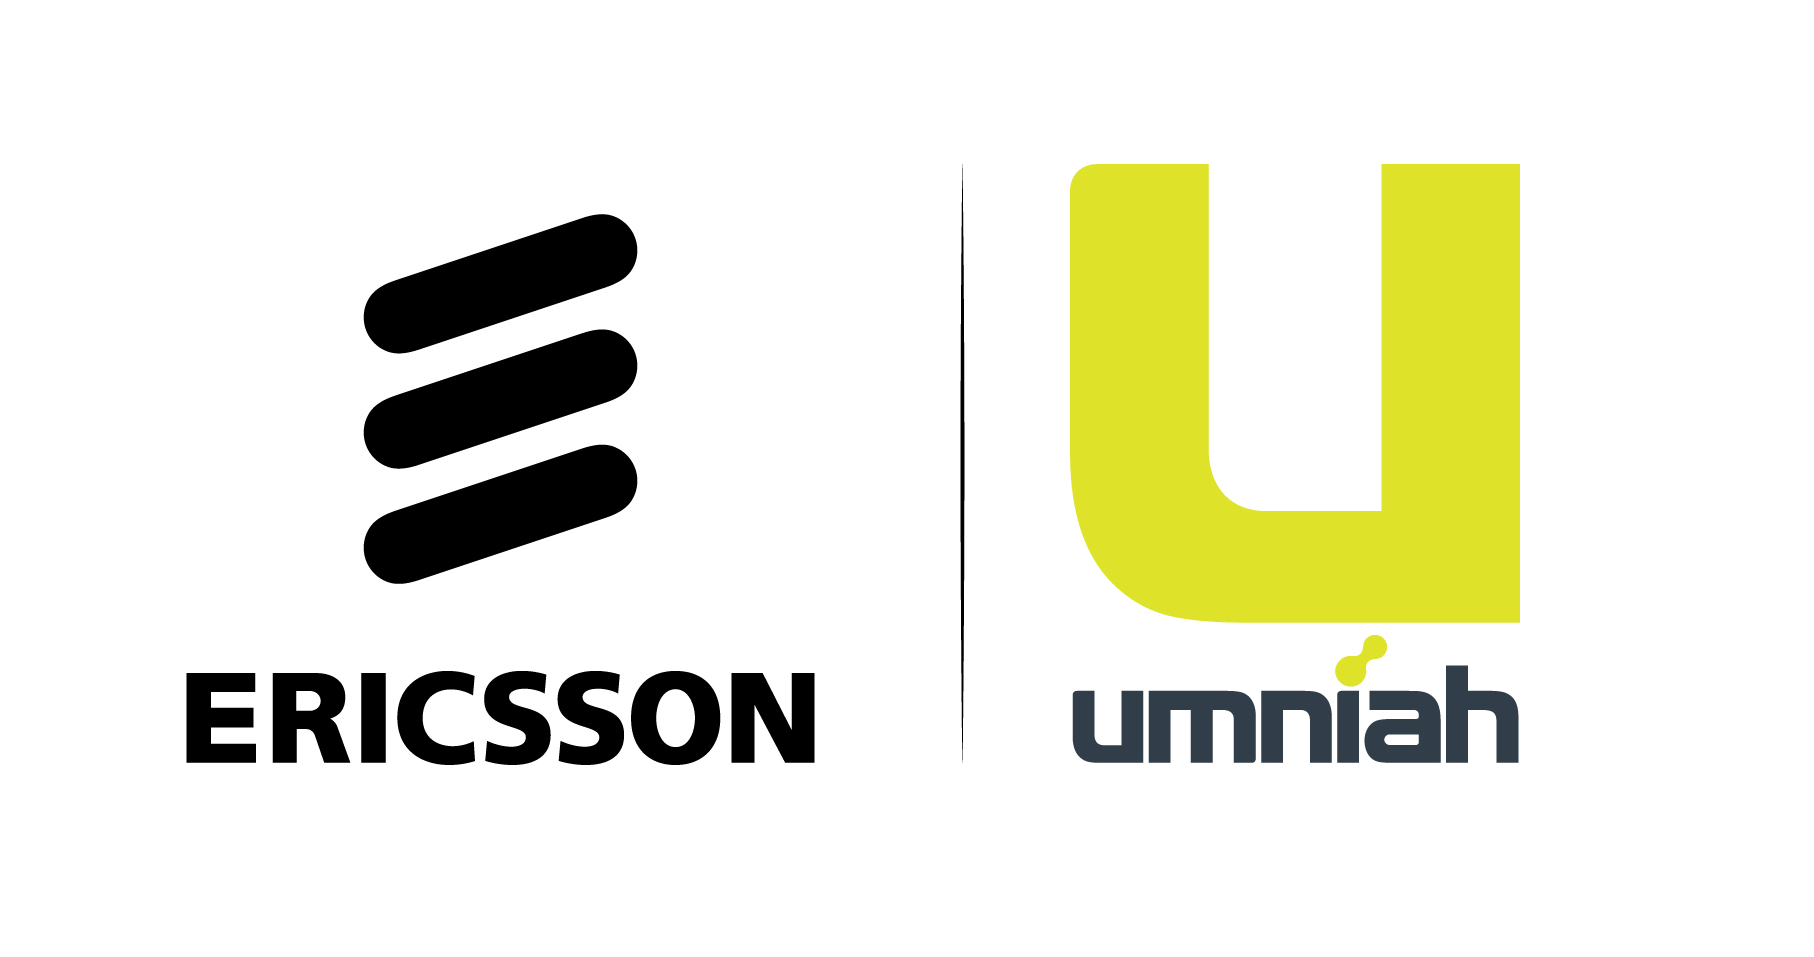 Ericsson and Umniah